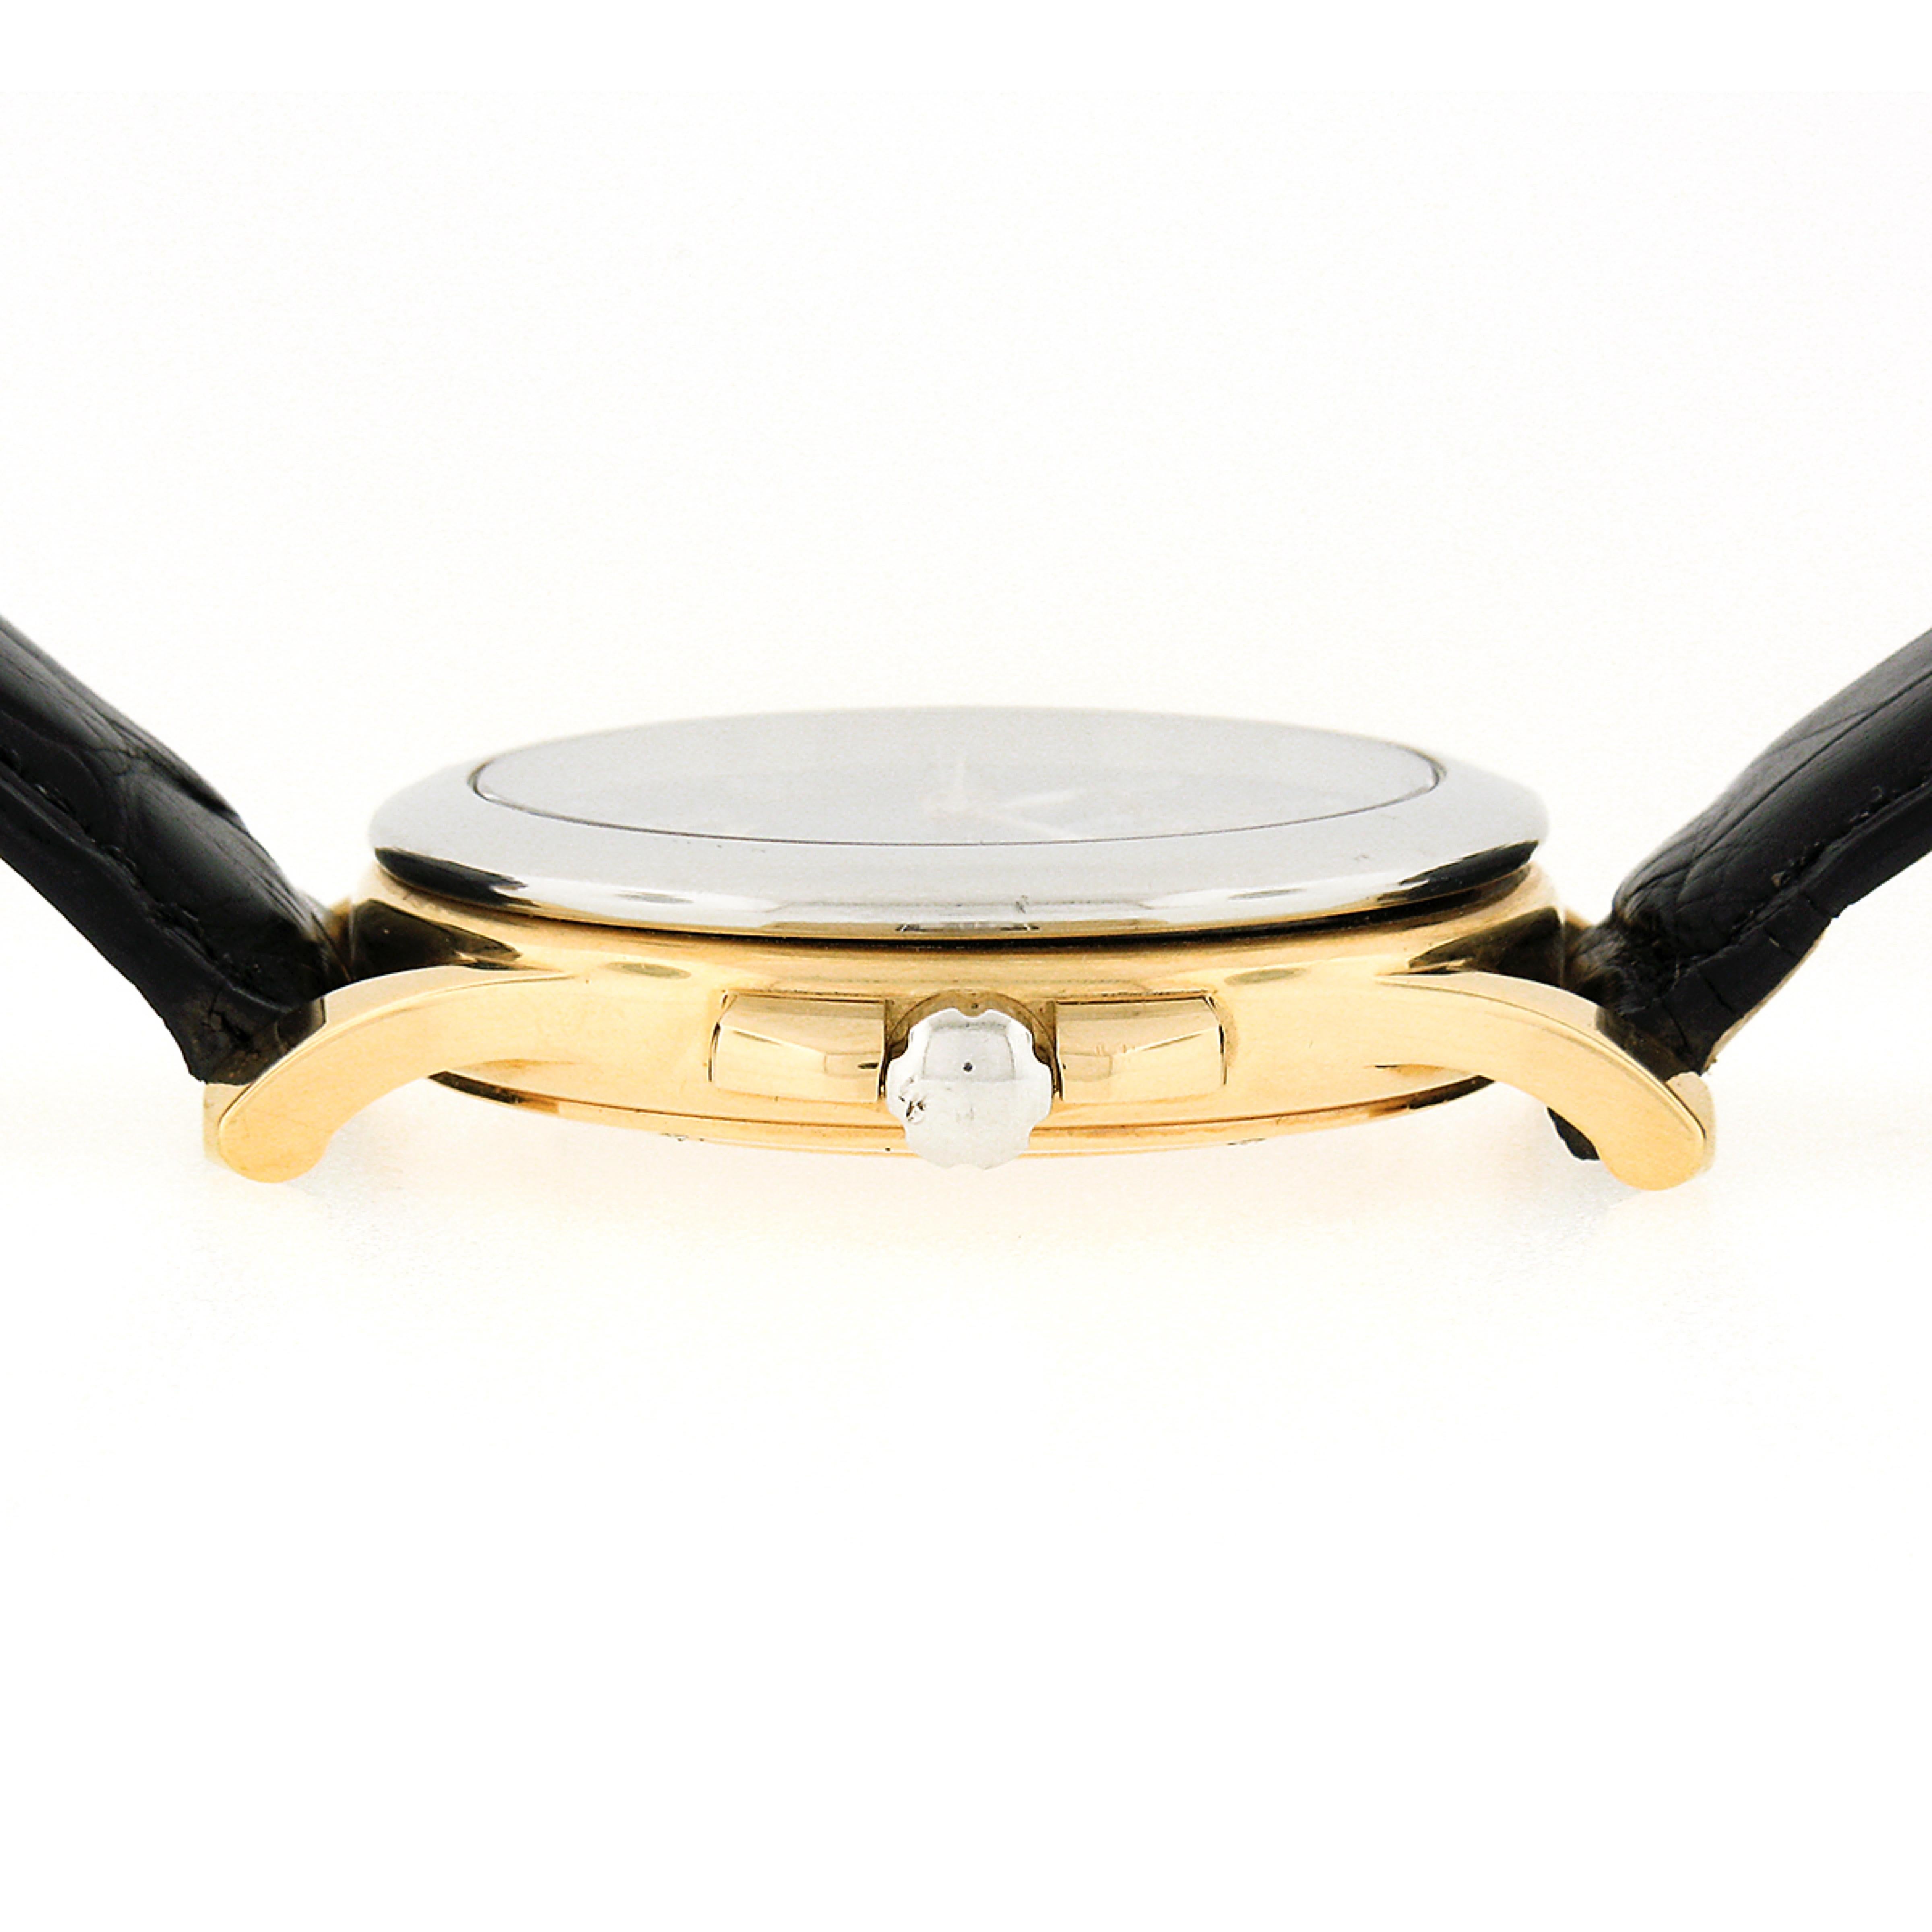 Invicta Limited Edition Platinum 18k Gold Automatic Swiss Wrist Watch 2